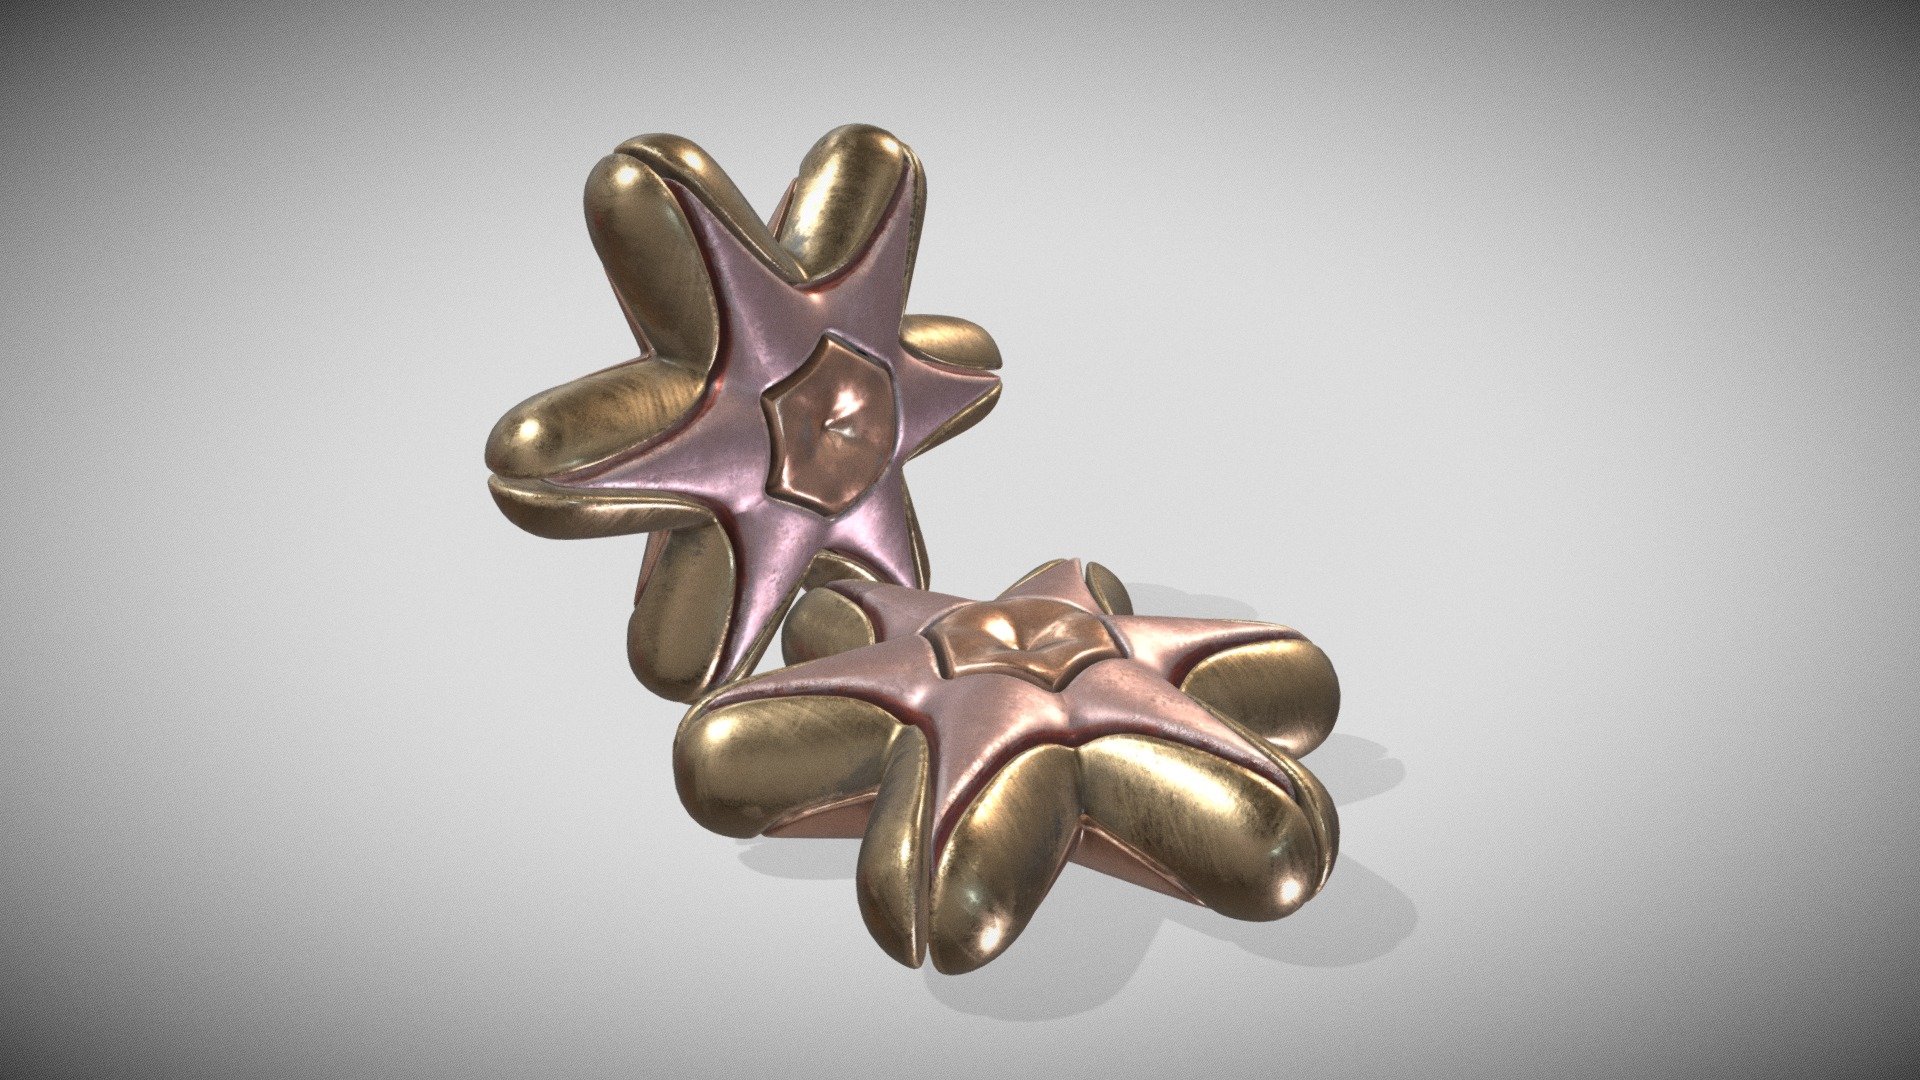 One Material PBR Metalness 4k - Fiorello - Download Free 3D model by Francesco Coldesina (@topfrank2013) 3d model